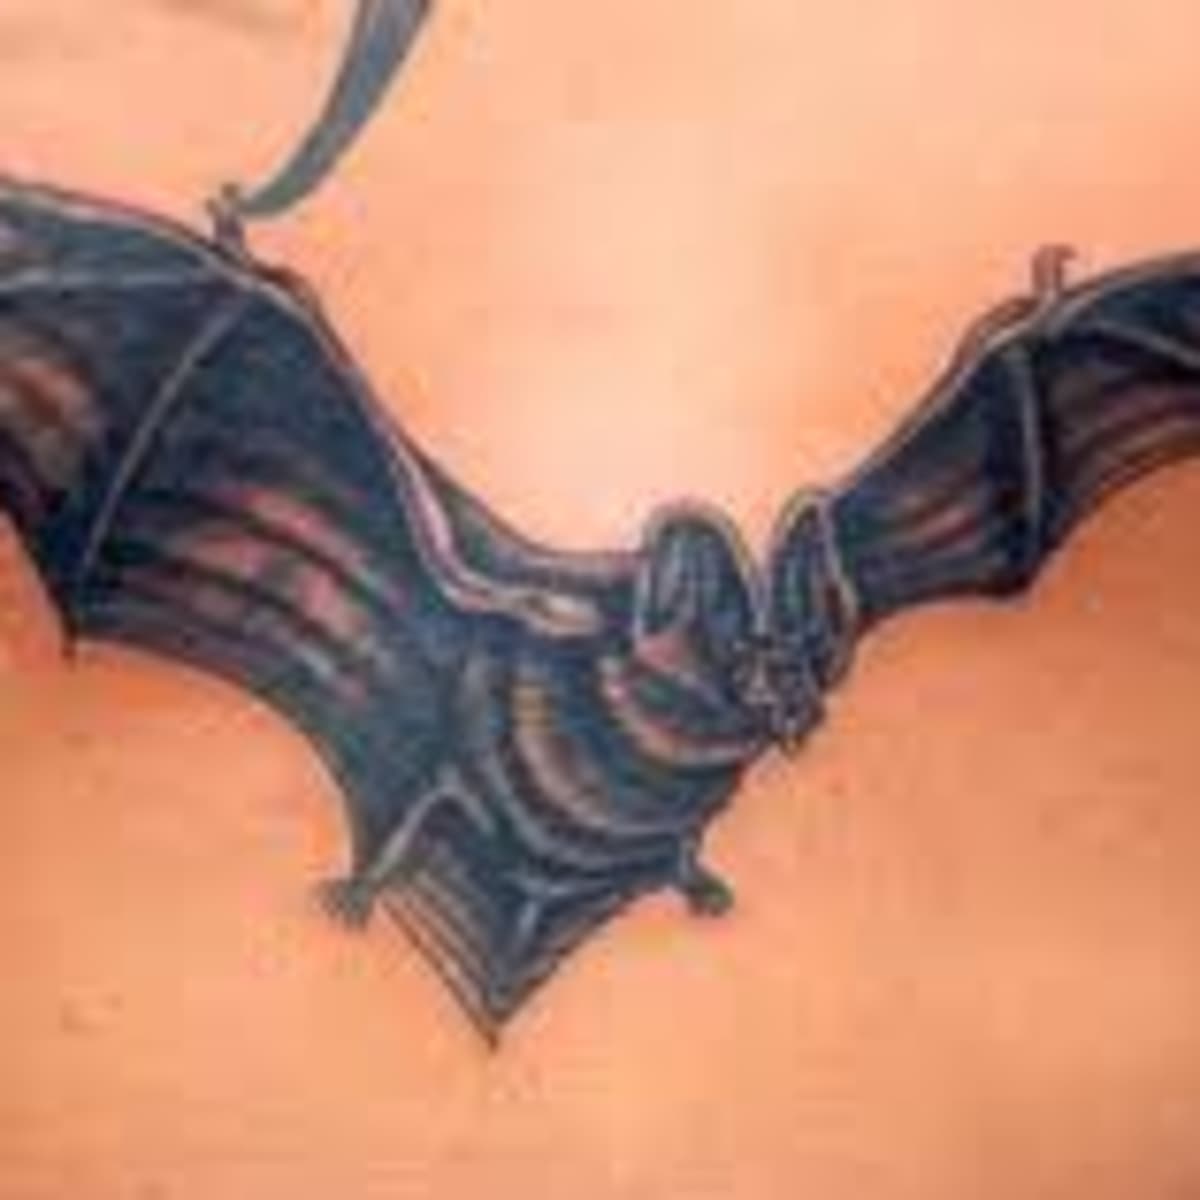 Upside down sternum bat by  Ace  Sword Tattoo Parlour  Facebook